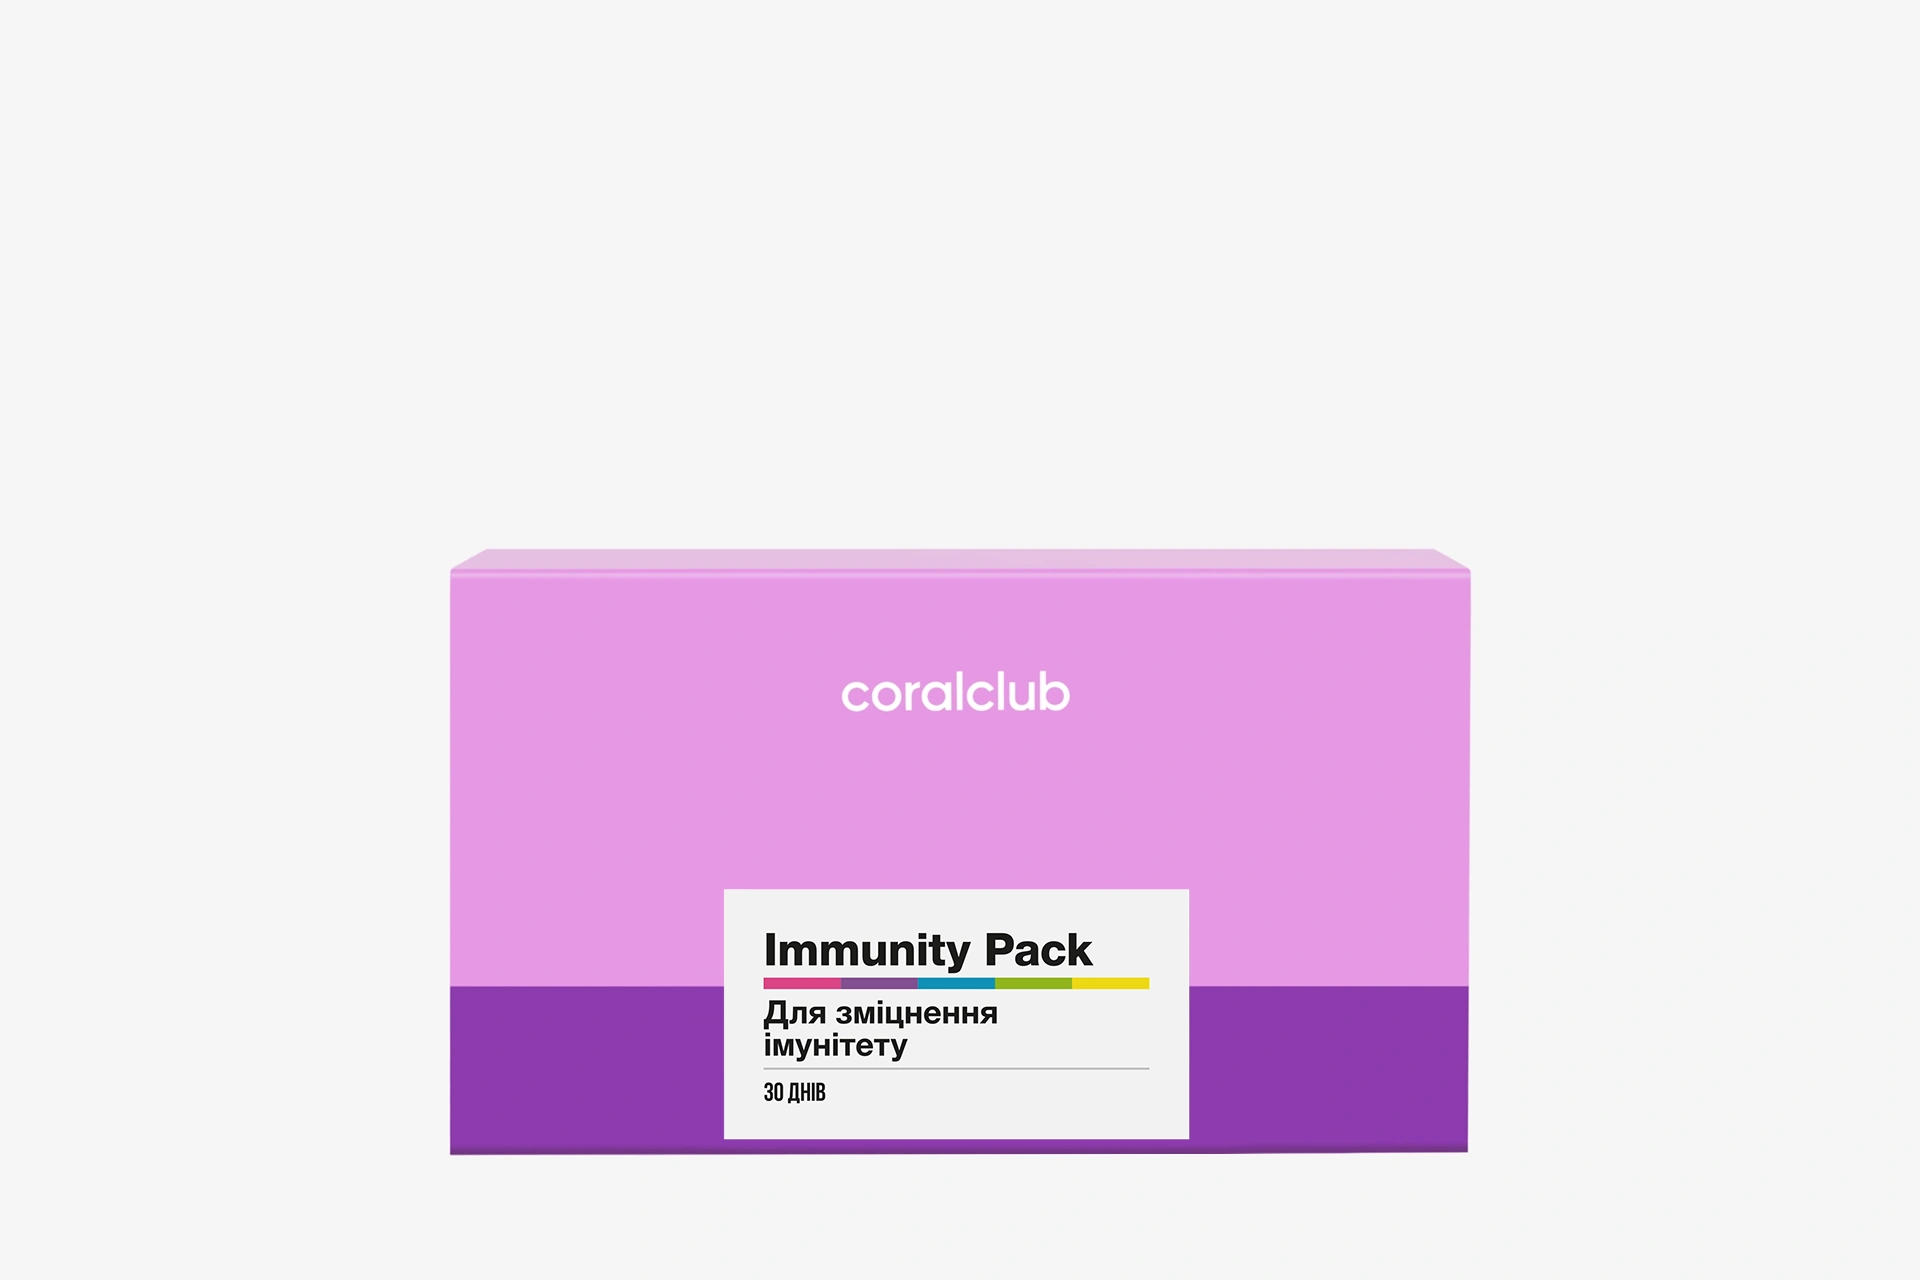 Immunity Pack